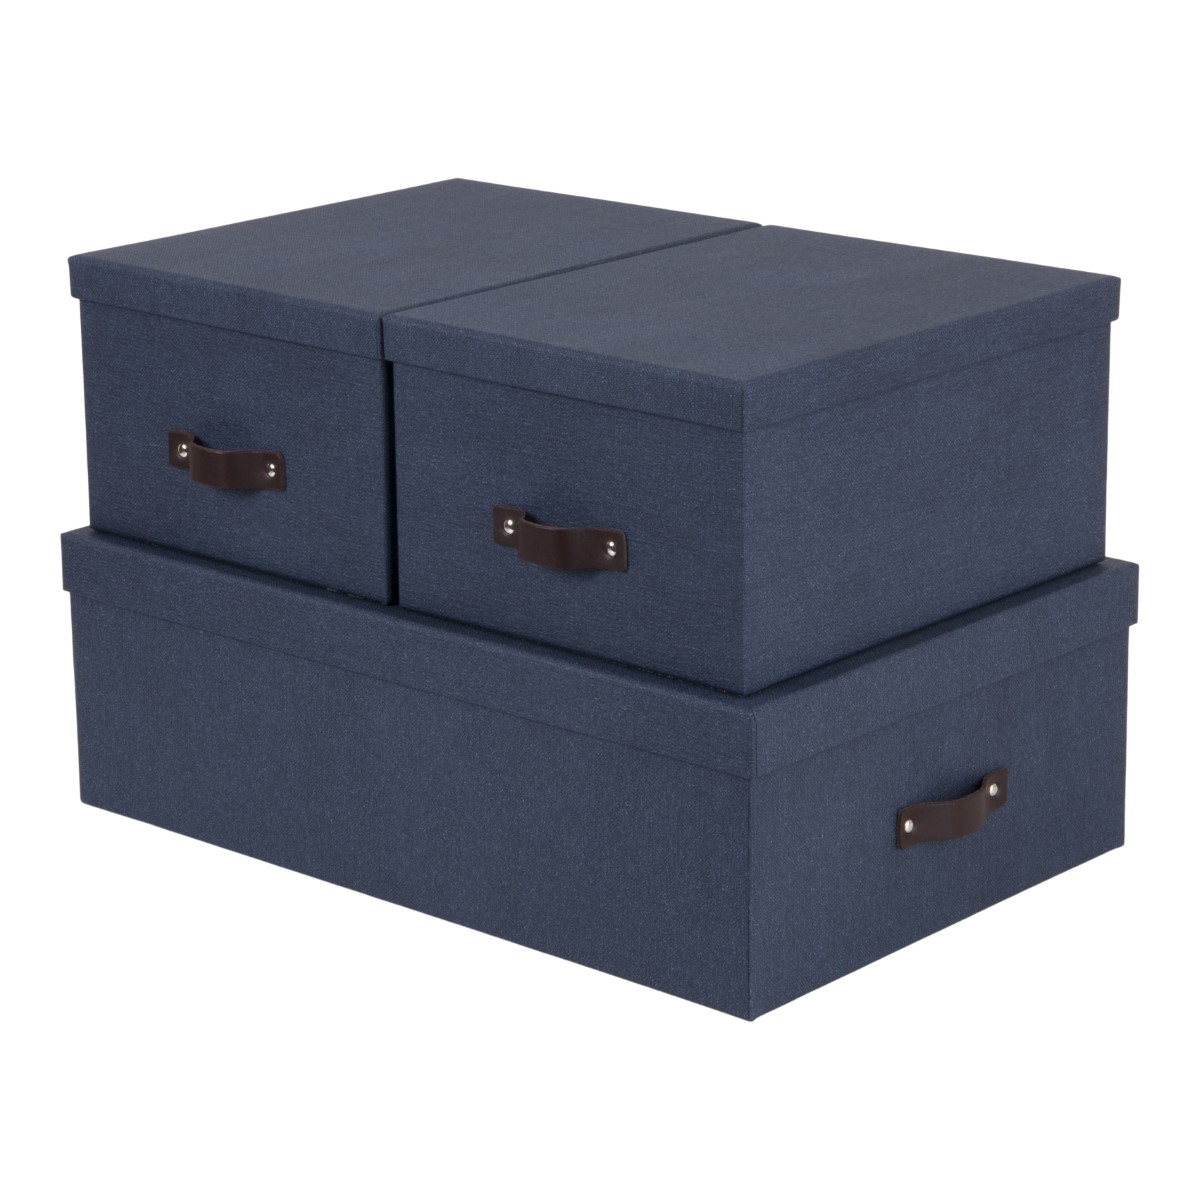 Inge Storage Box set of 3 Blue in the group Hobby & Creativity / Organize / Storage at Pen Store (127311)